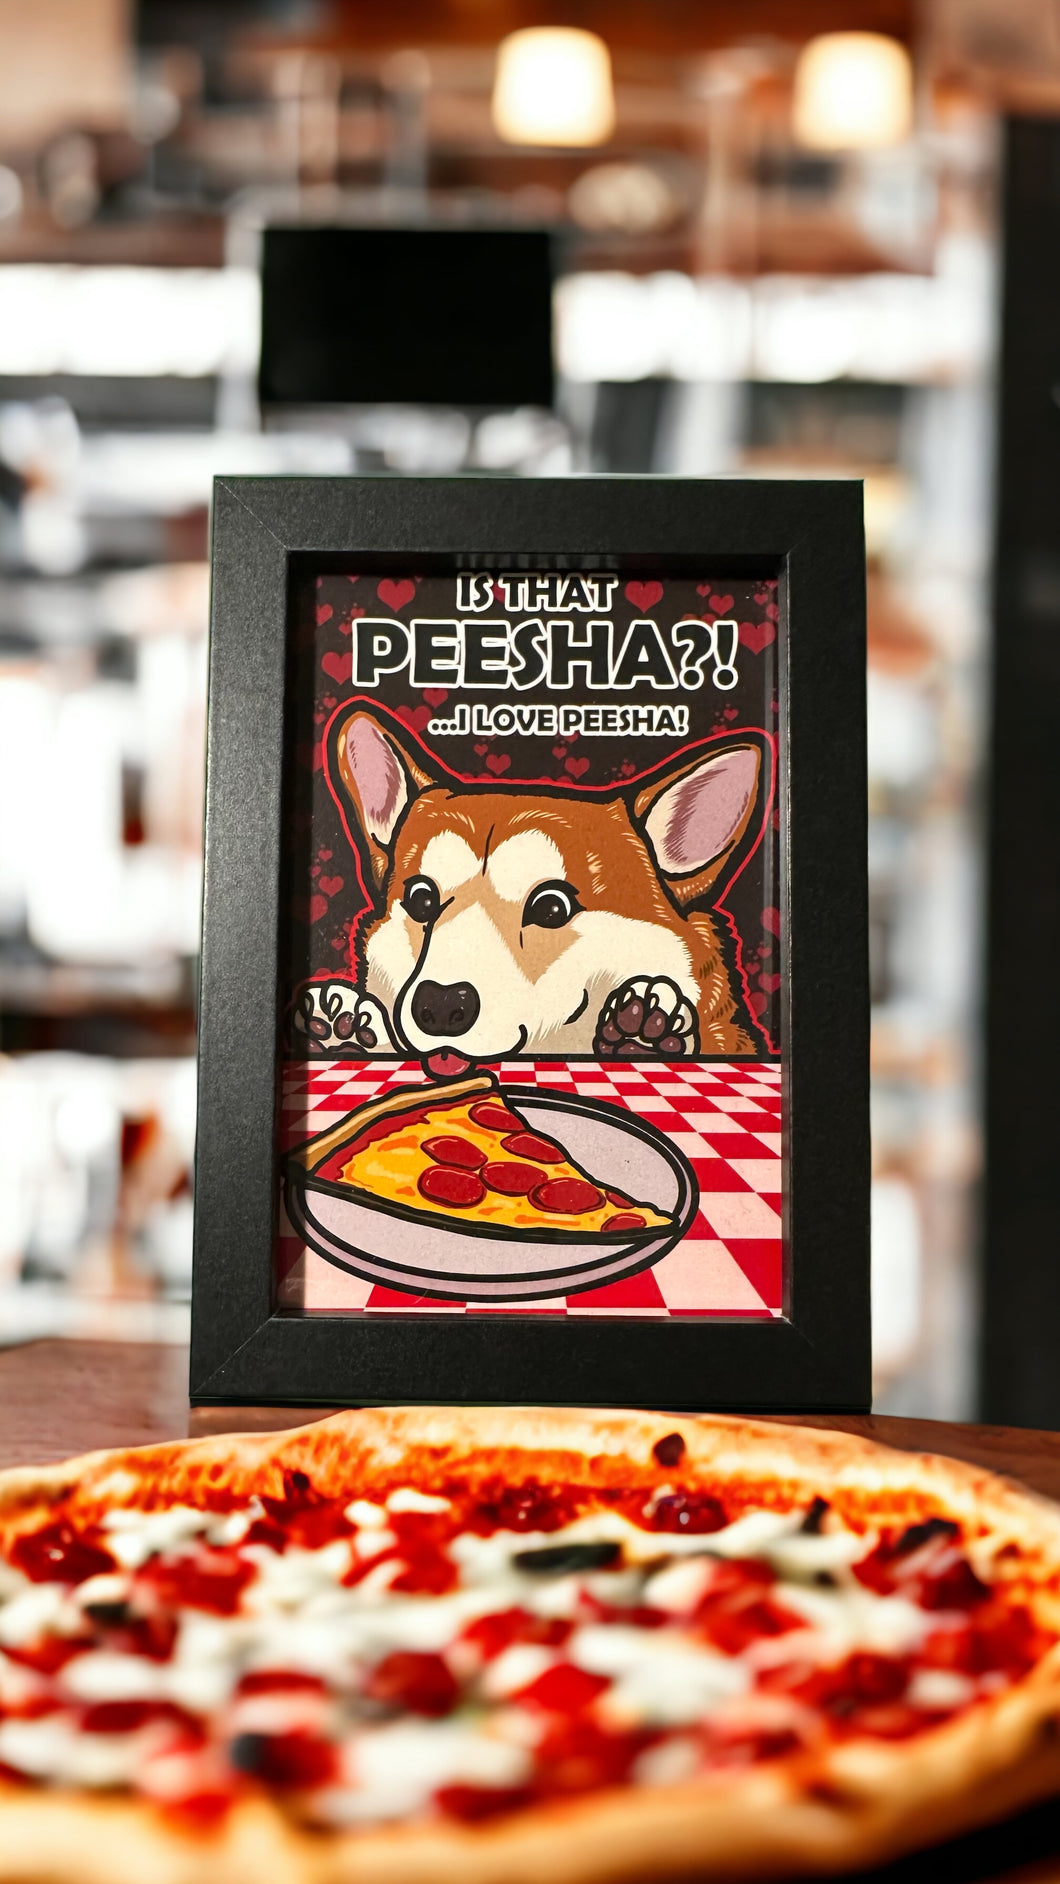  Is that peesha? I love peesha! Corgi puppy dog with pizza - Framed 4 x 6 inch art print!